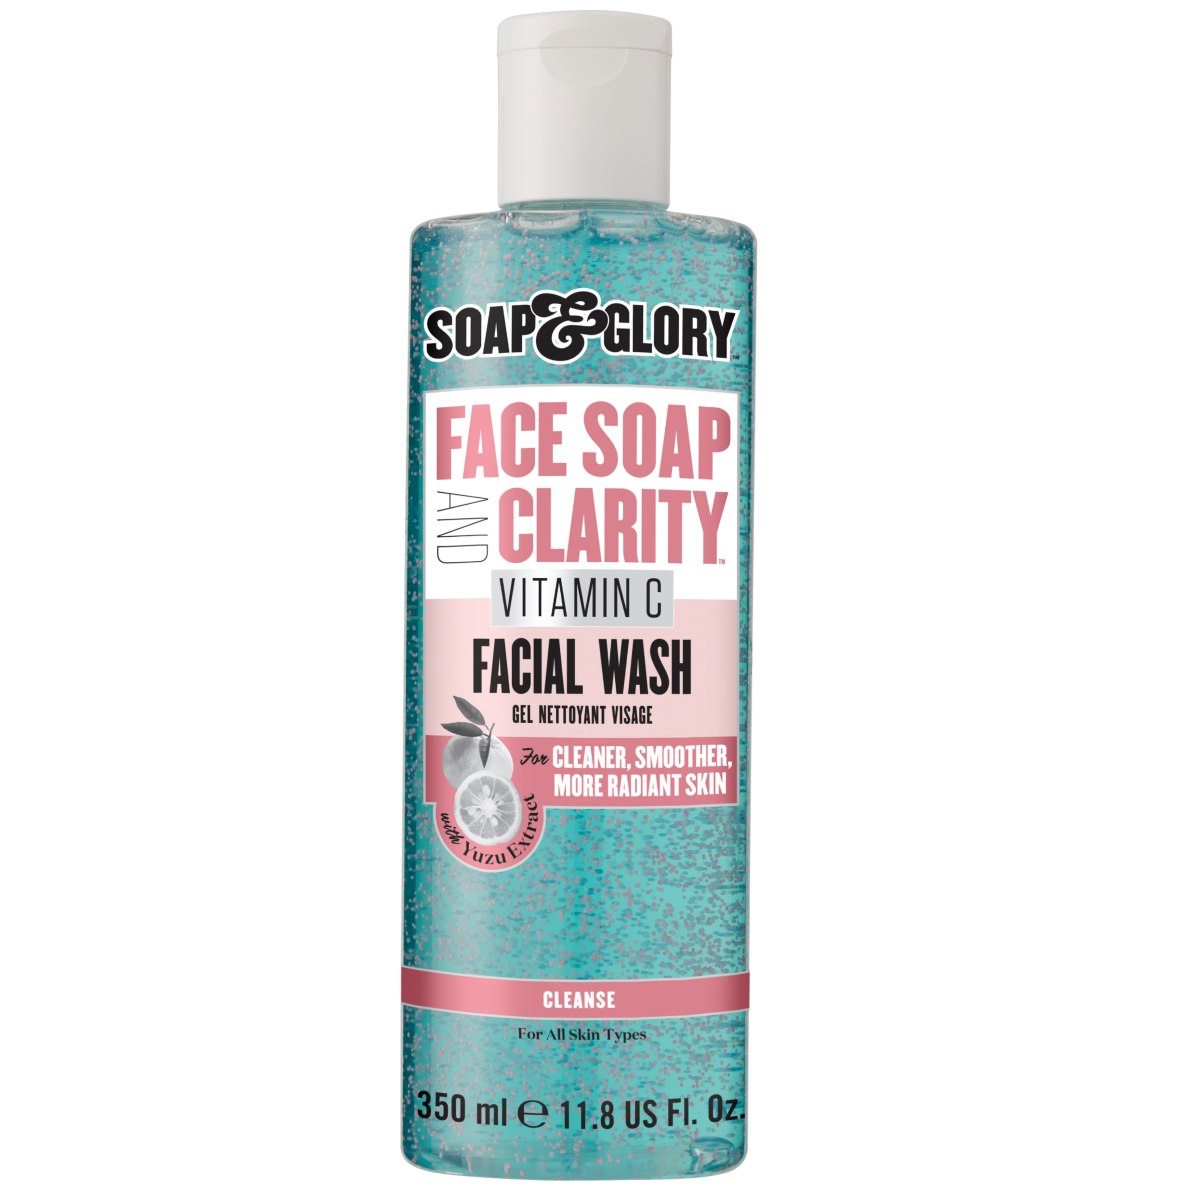 Face Soap & Clarity Vitamin C Face Wash 